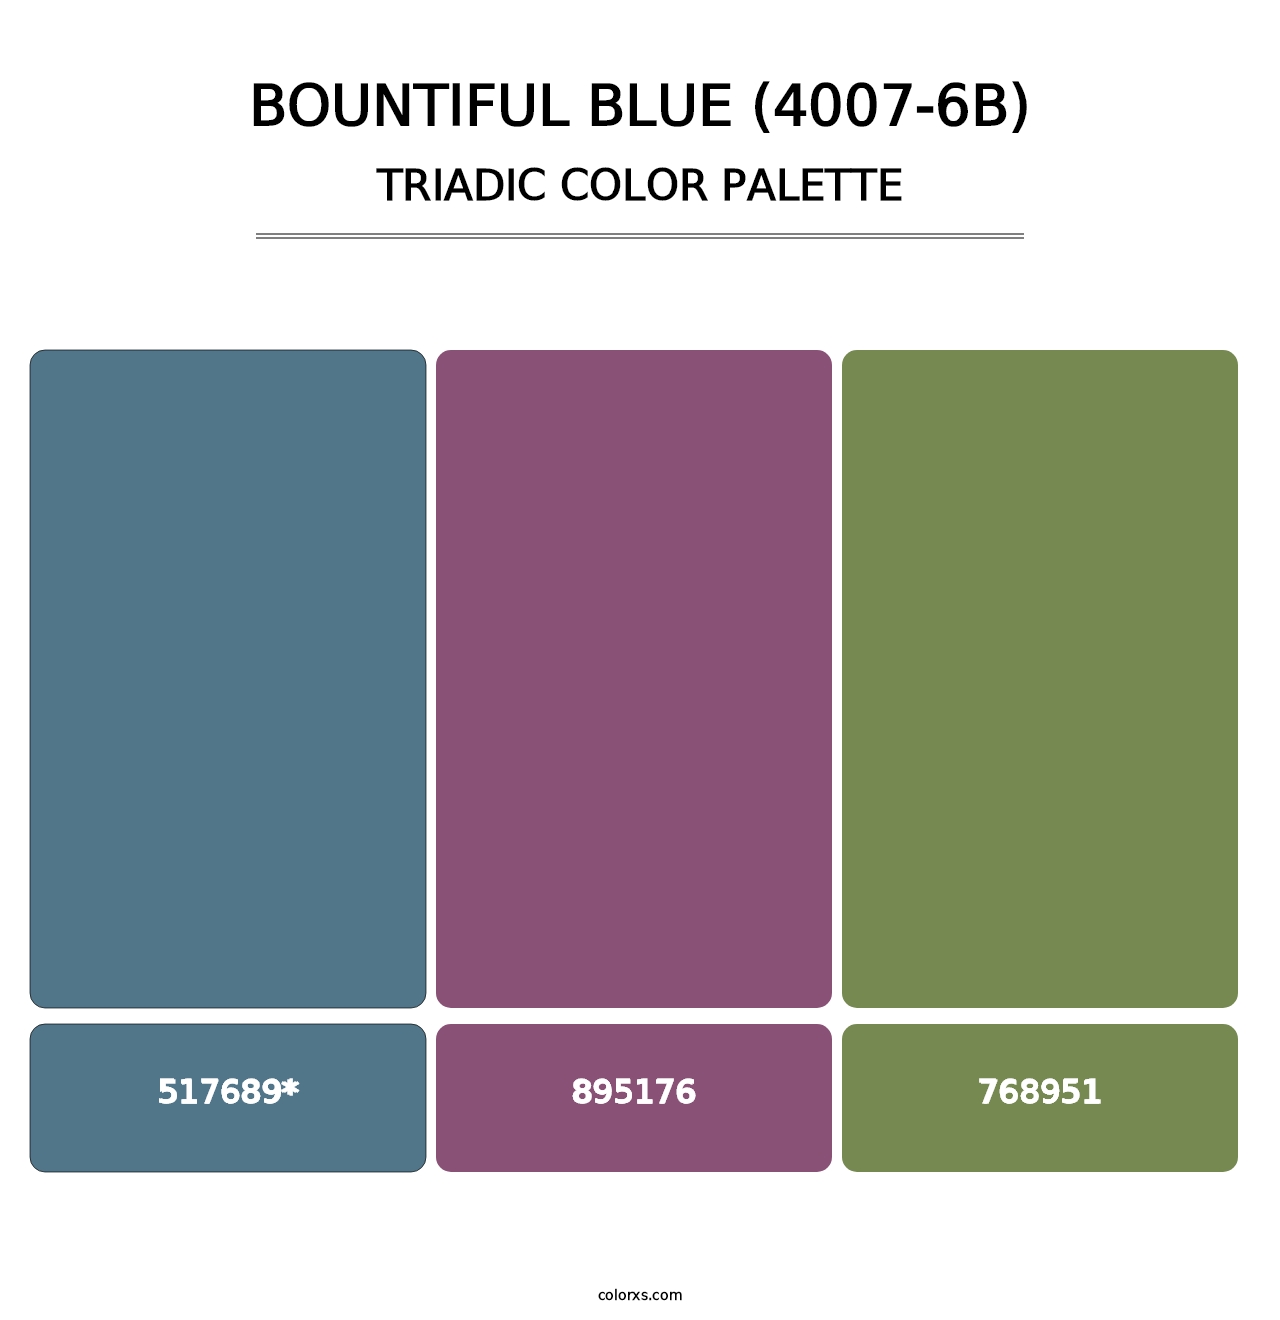 Bountiful Blue (4007-6B) - Triadic Color Palette